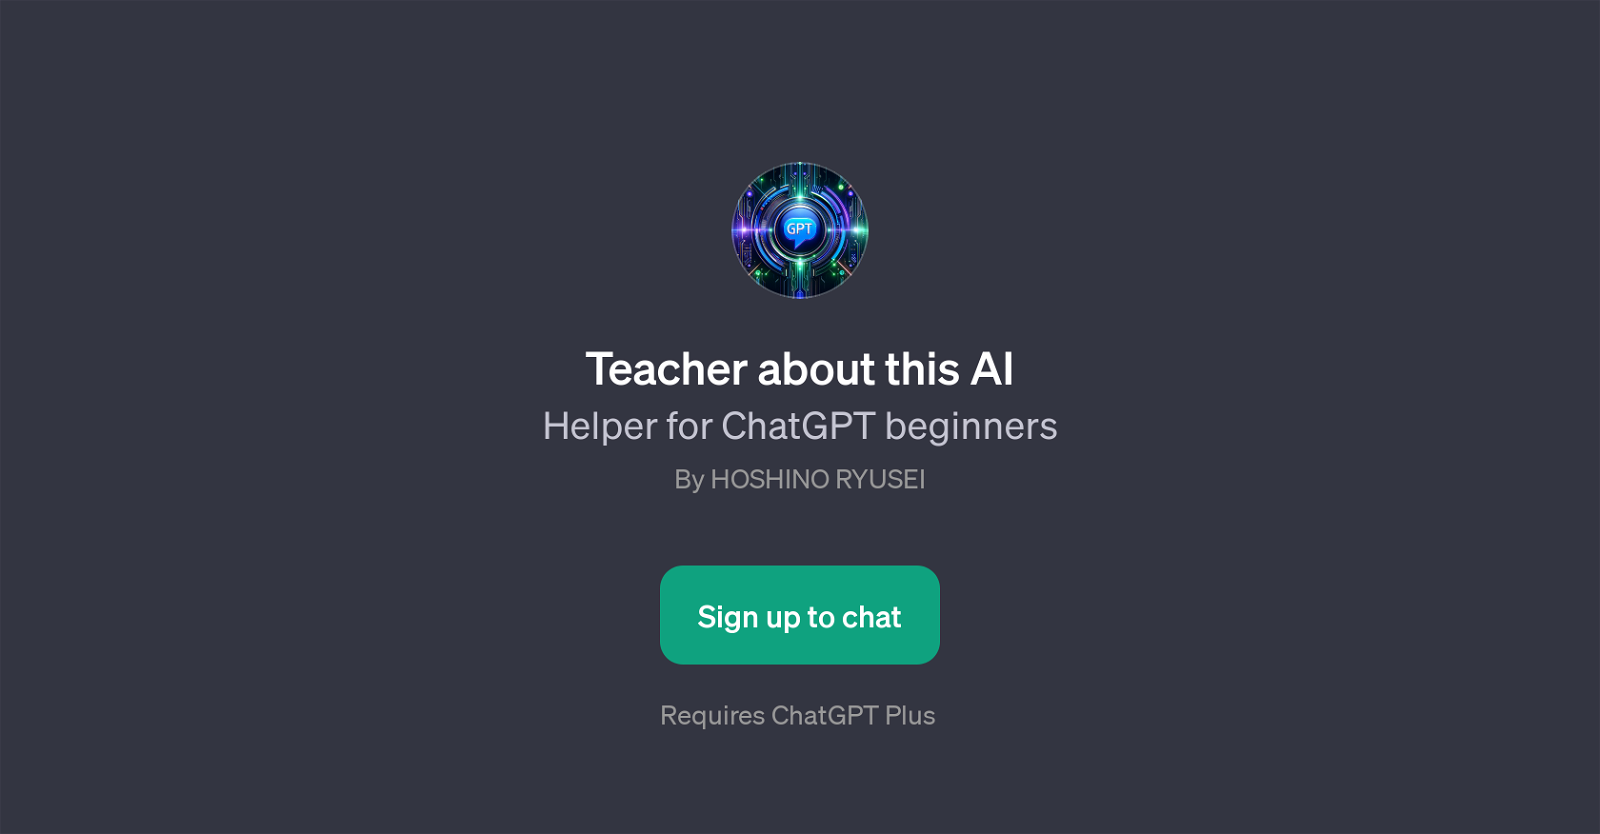 Teacher about this AI website